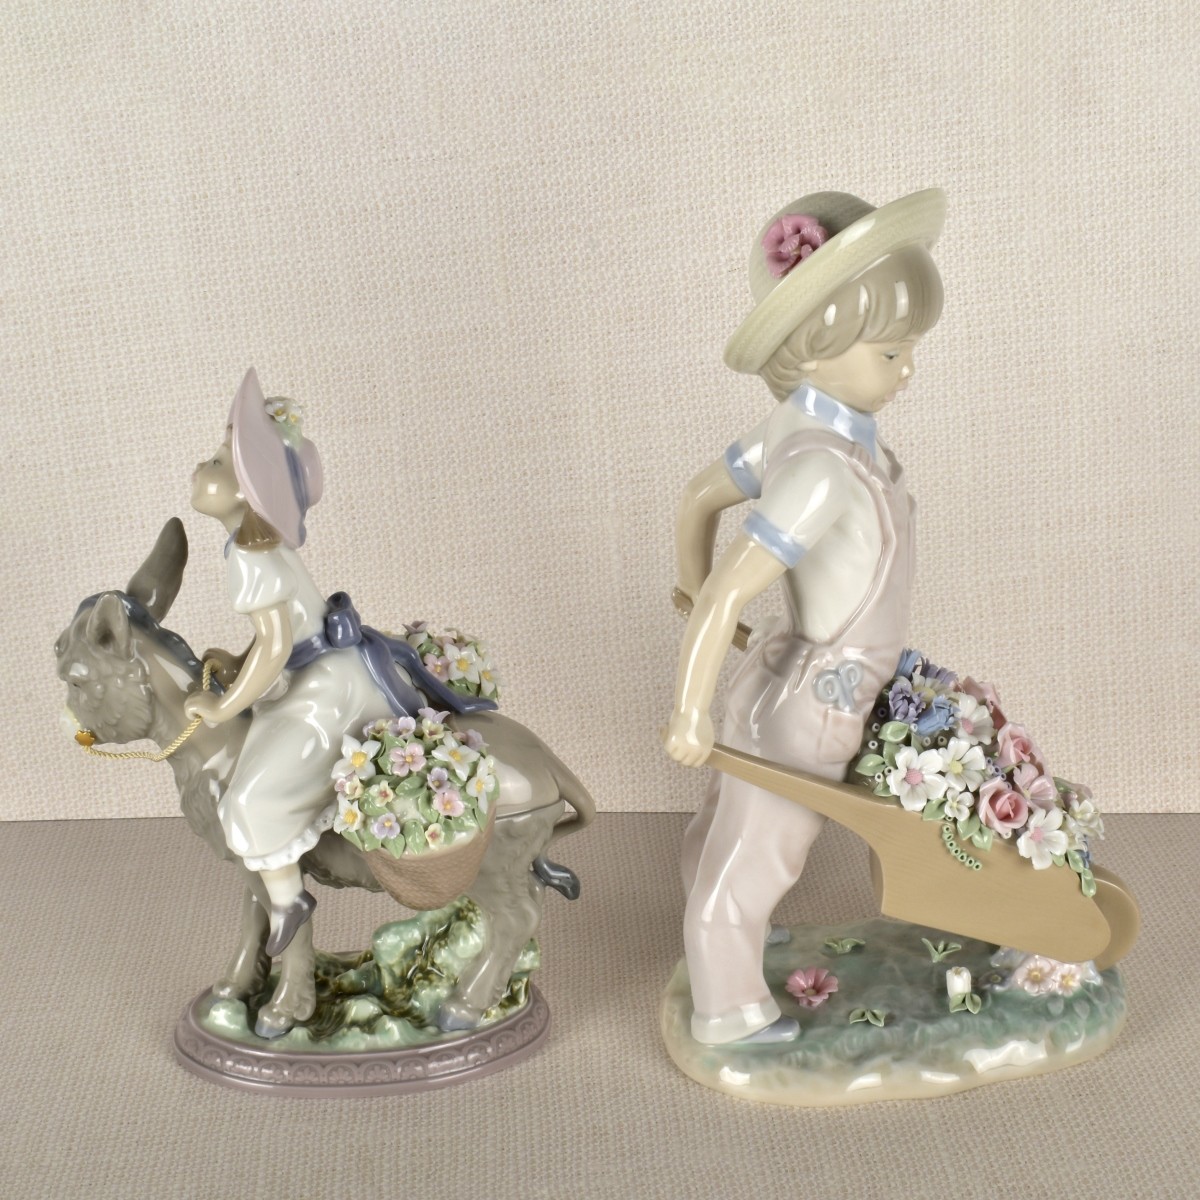 Lladro Porcelain Figures of Children